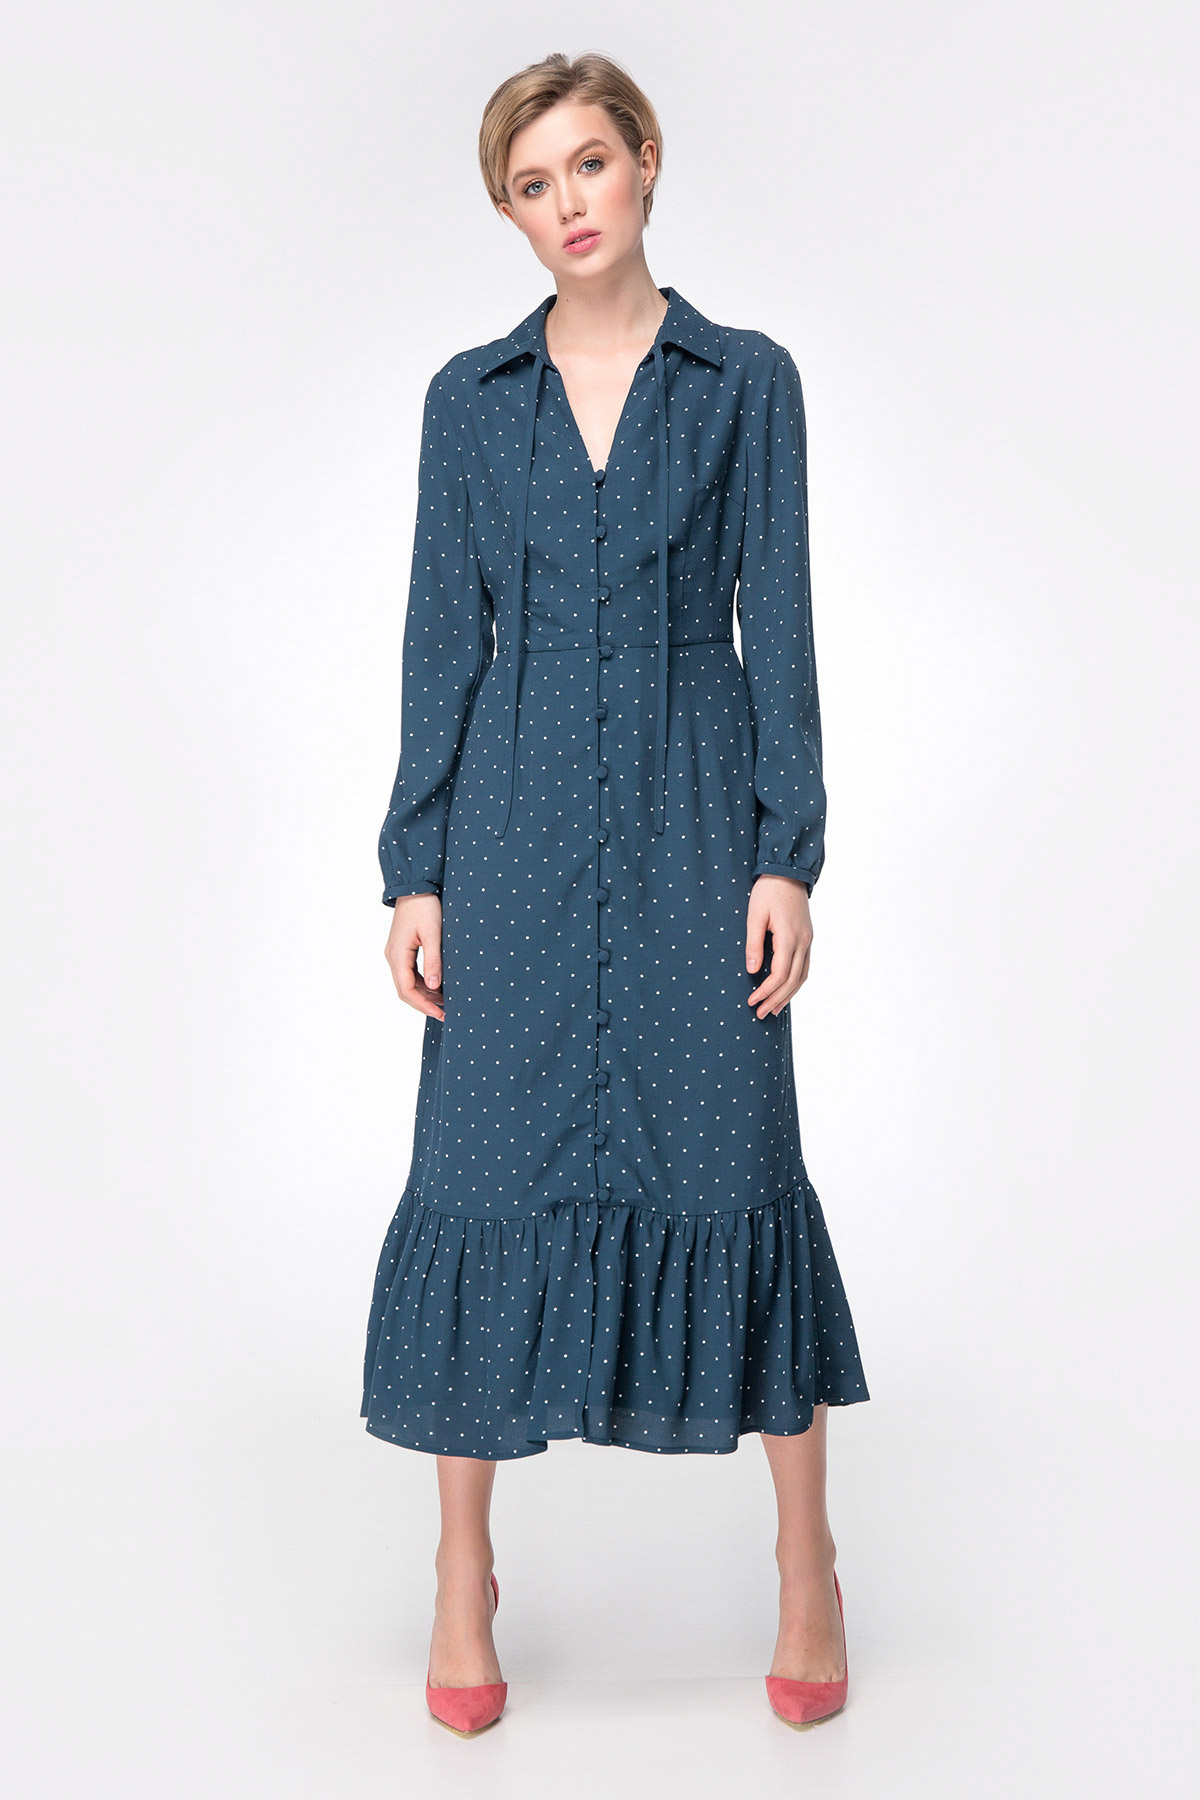 Dark-blue polka dot dress with pleats, photo 2